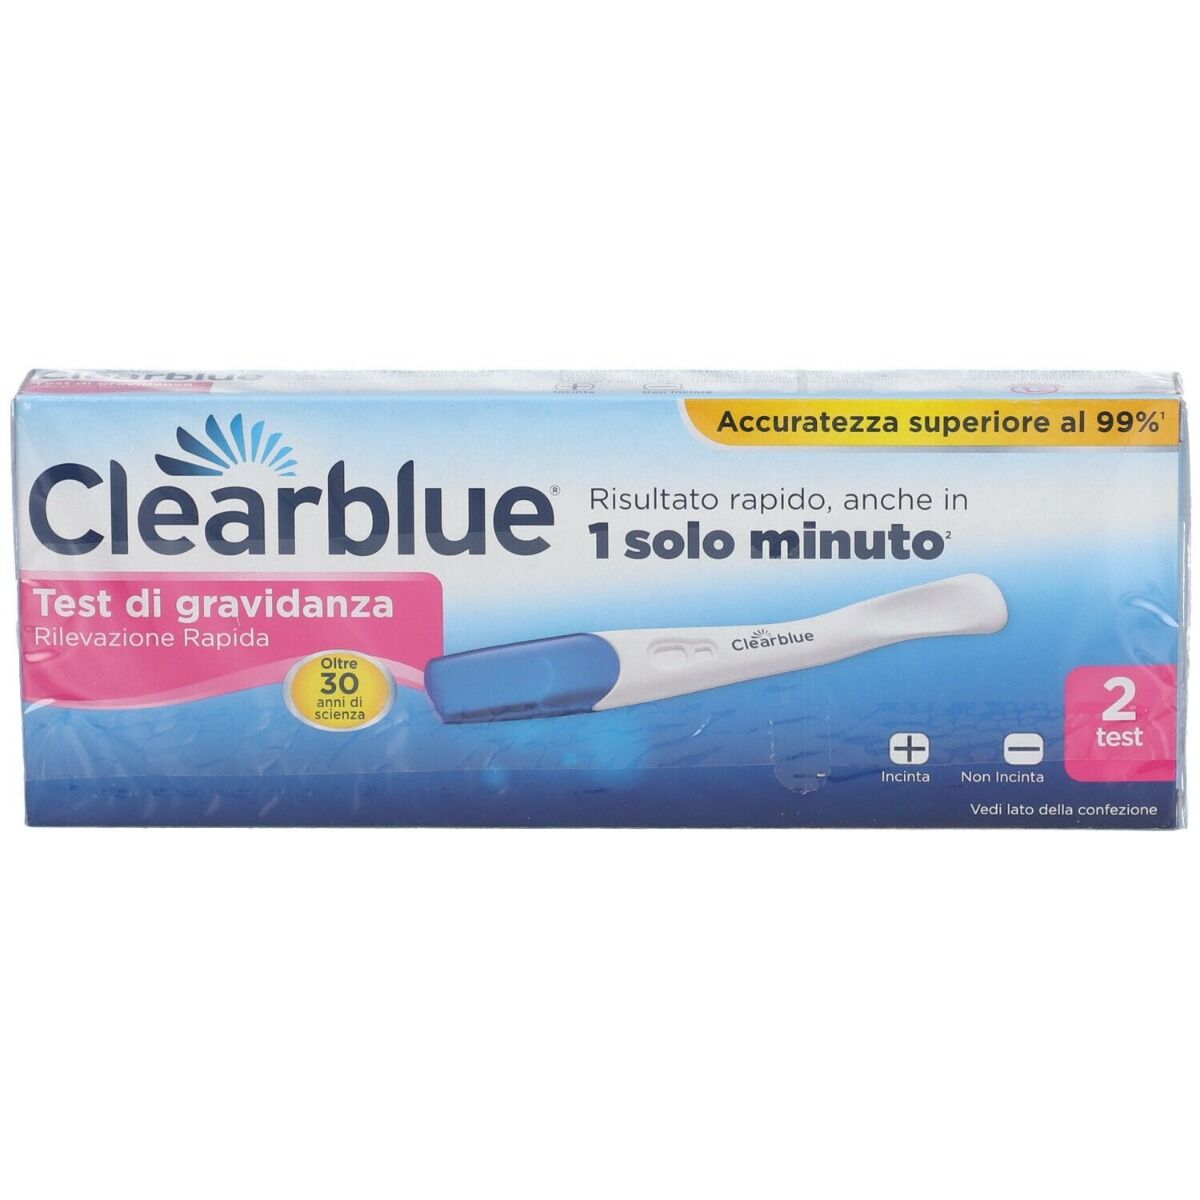 clearblue test di gravidanza rilevazione rapida 2 test